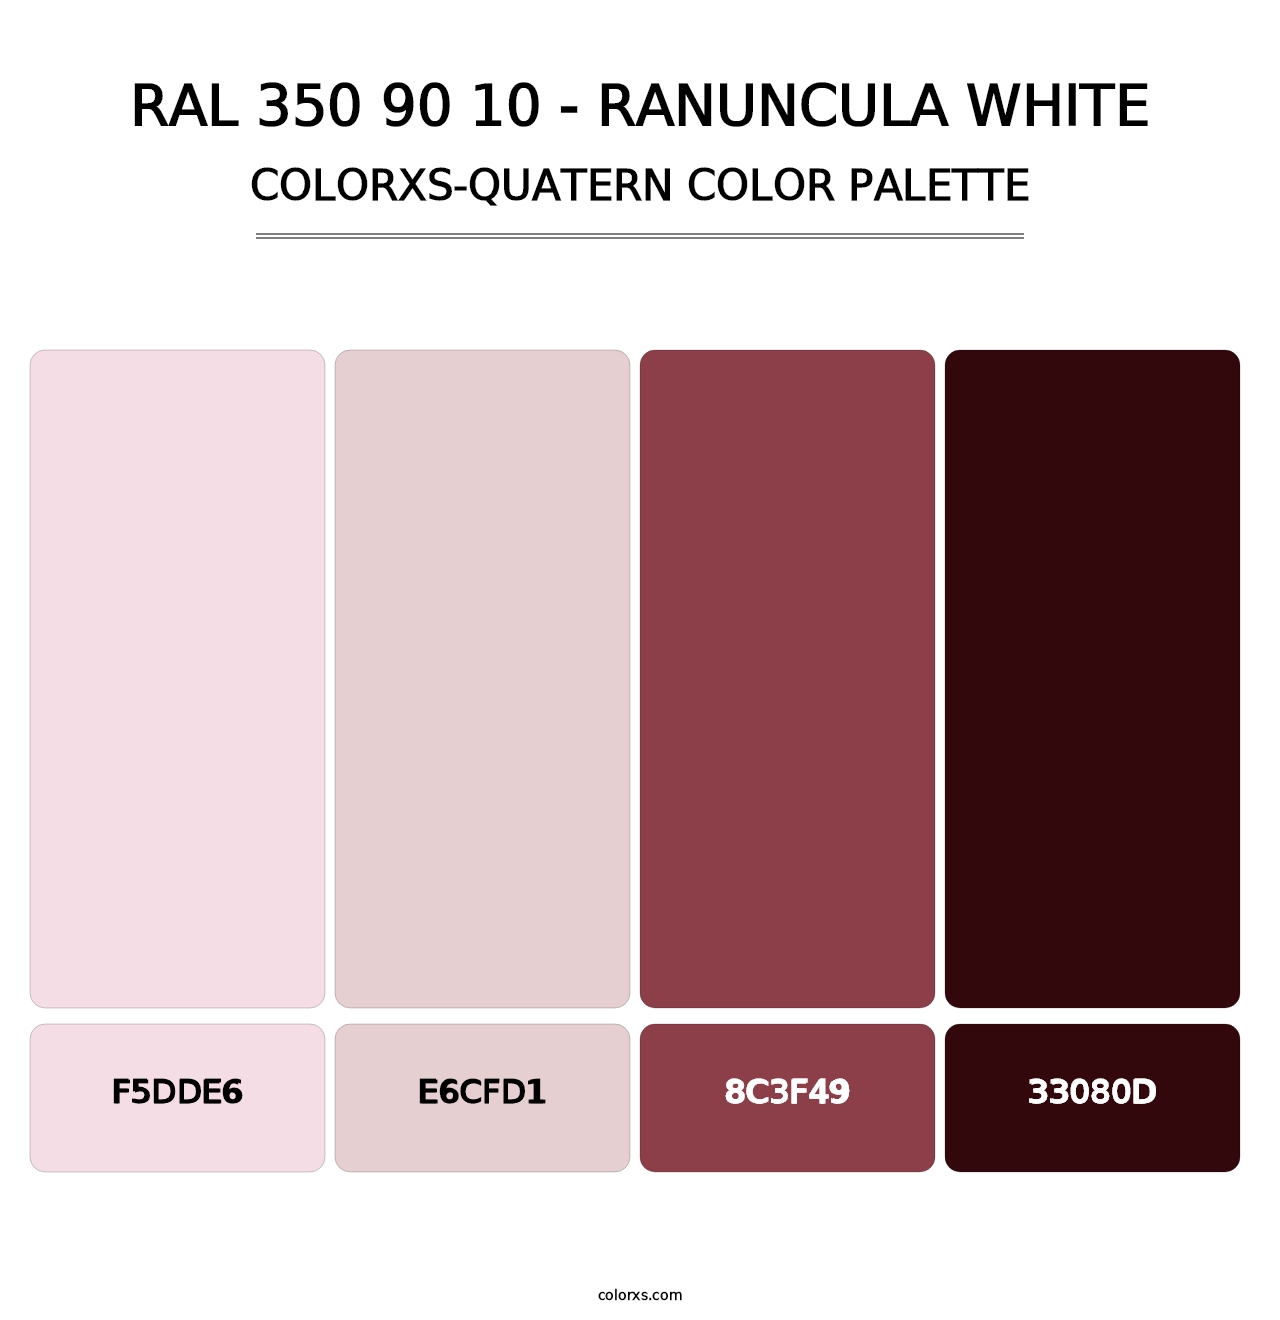 RAL 350 90 10 - Ranuncula White - Colorxs Quatern Palette